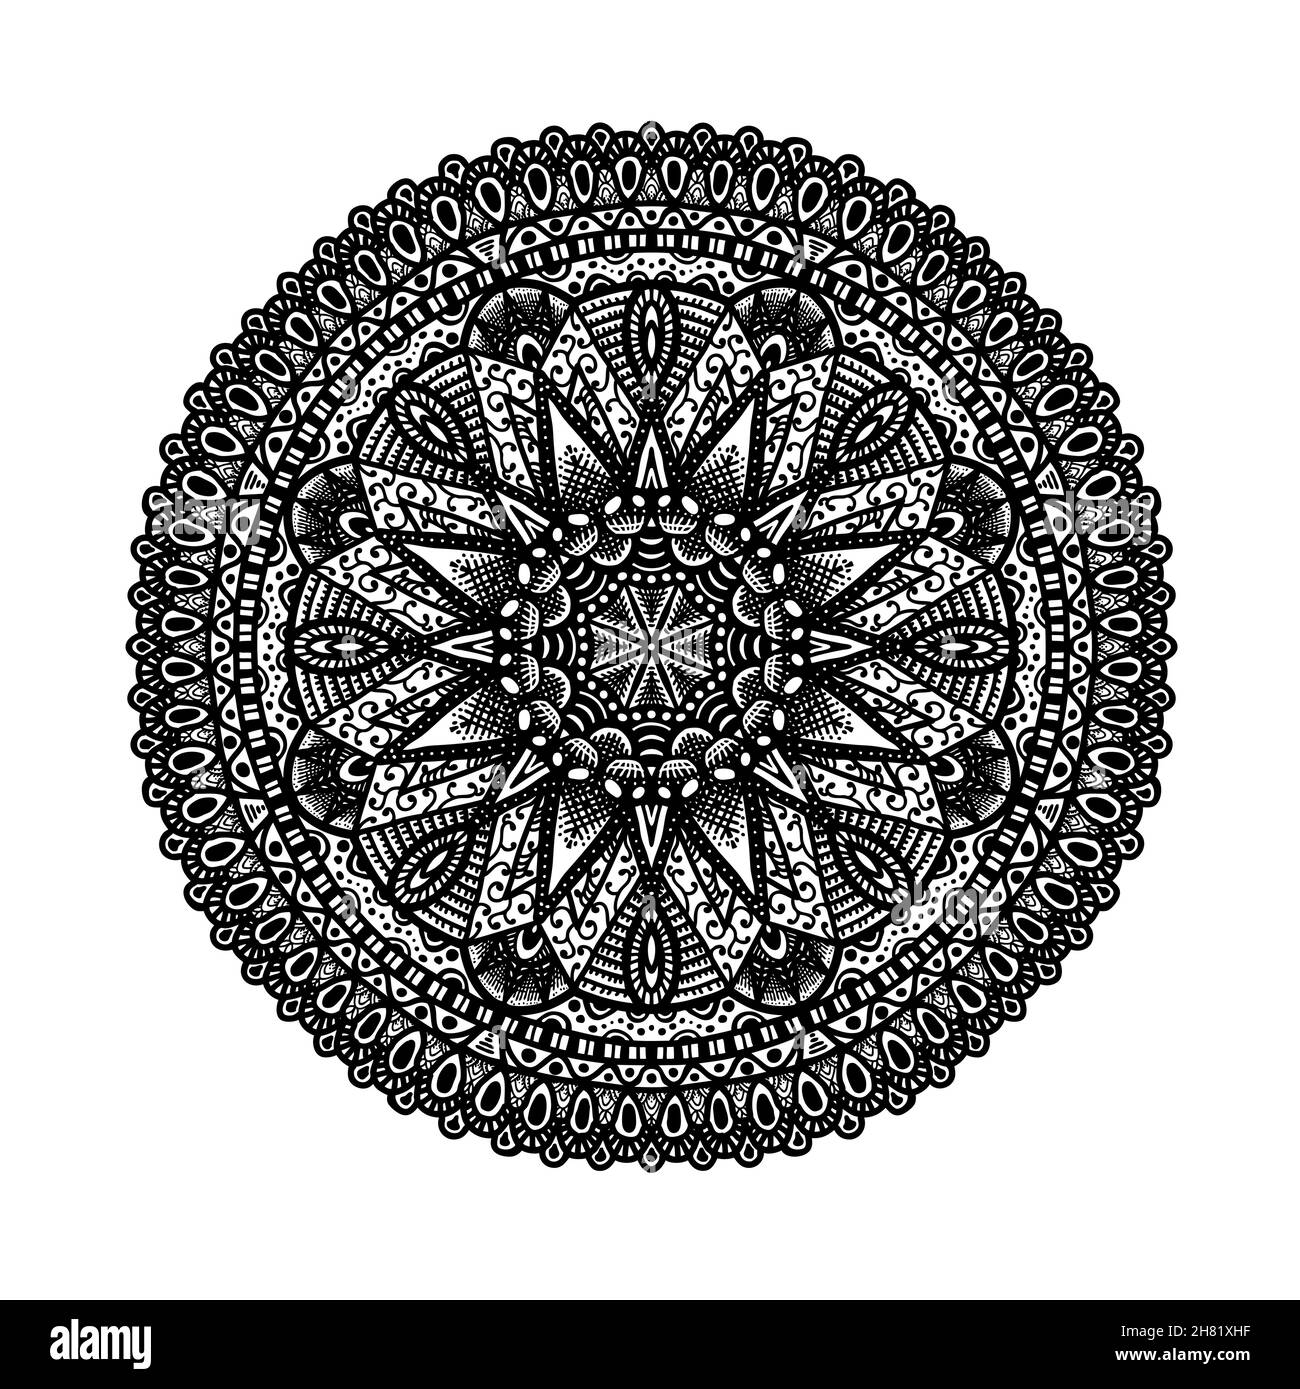 Mandala black and white -Fotos und -Bildmaterial in hoher Auflösung – Alamy